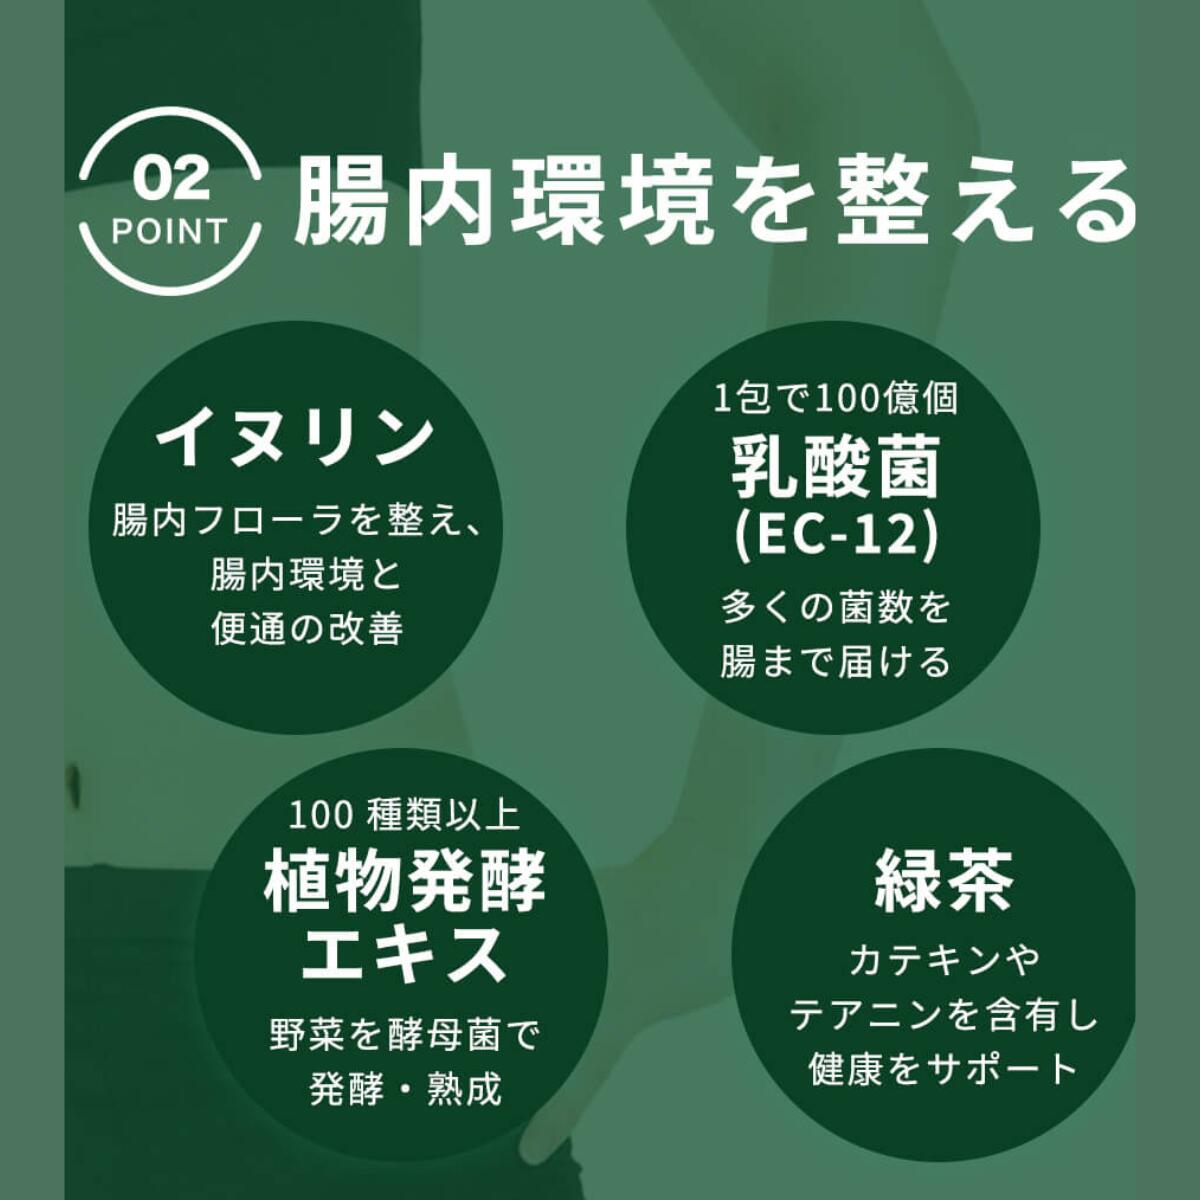 Happy Green ハニーレモン 3g x 30本セット